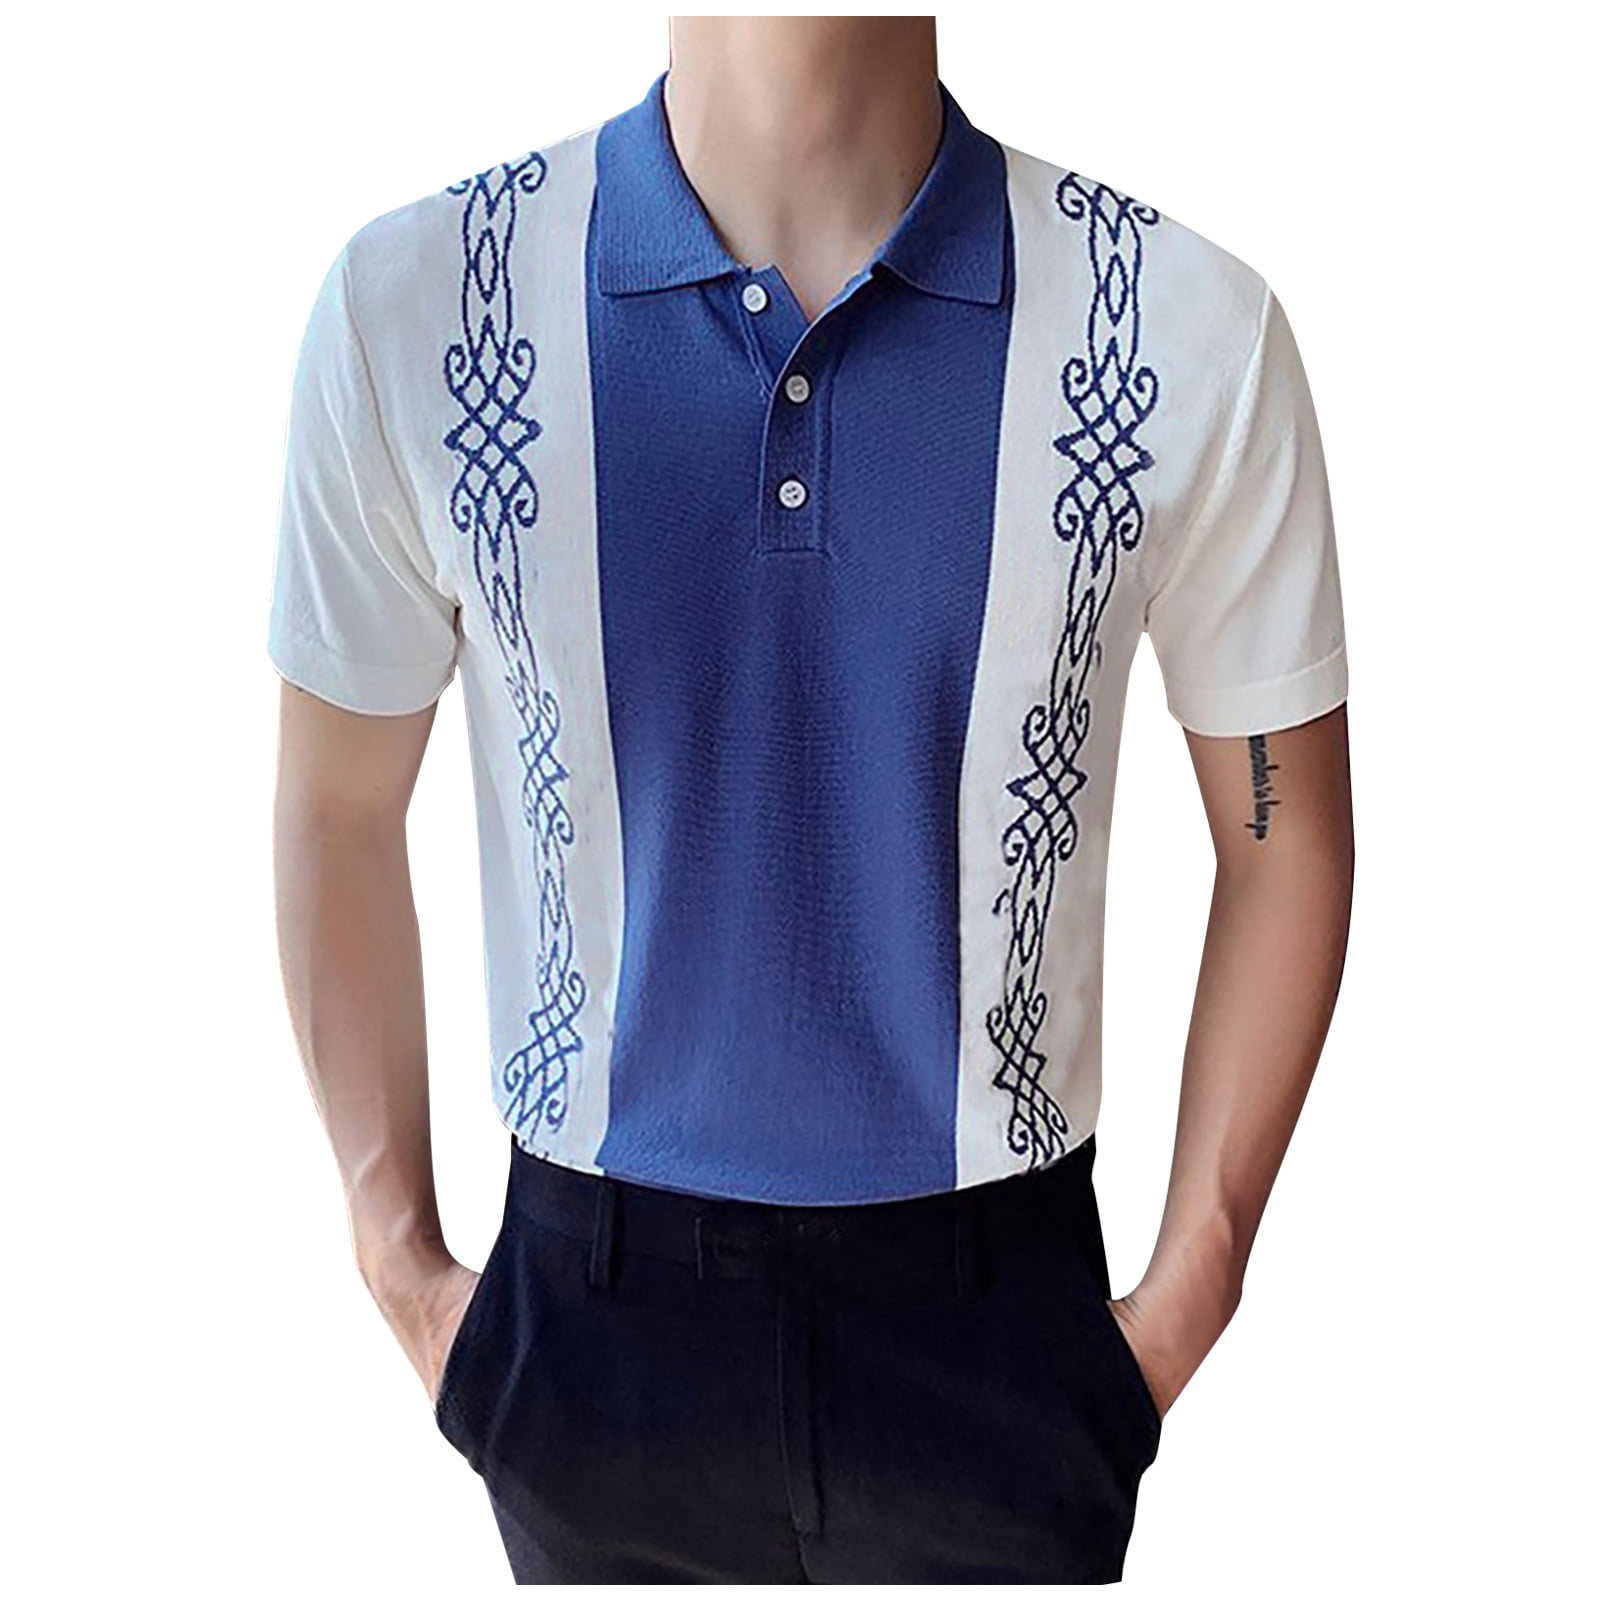 Juebong Men\'s Cable Knit Golf Shirts Fashion Street Slim Fit Short Sleeve  Hawaii Polo Shirts, Medium, Blue